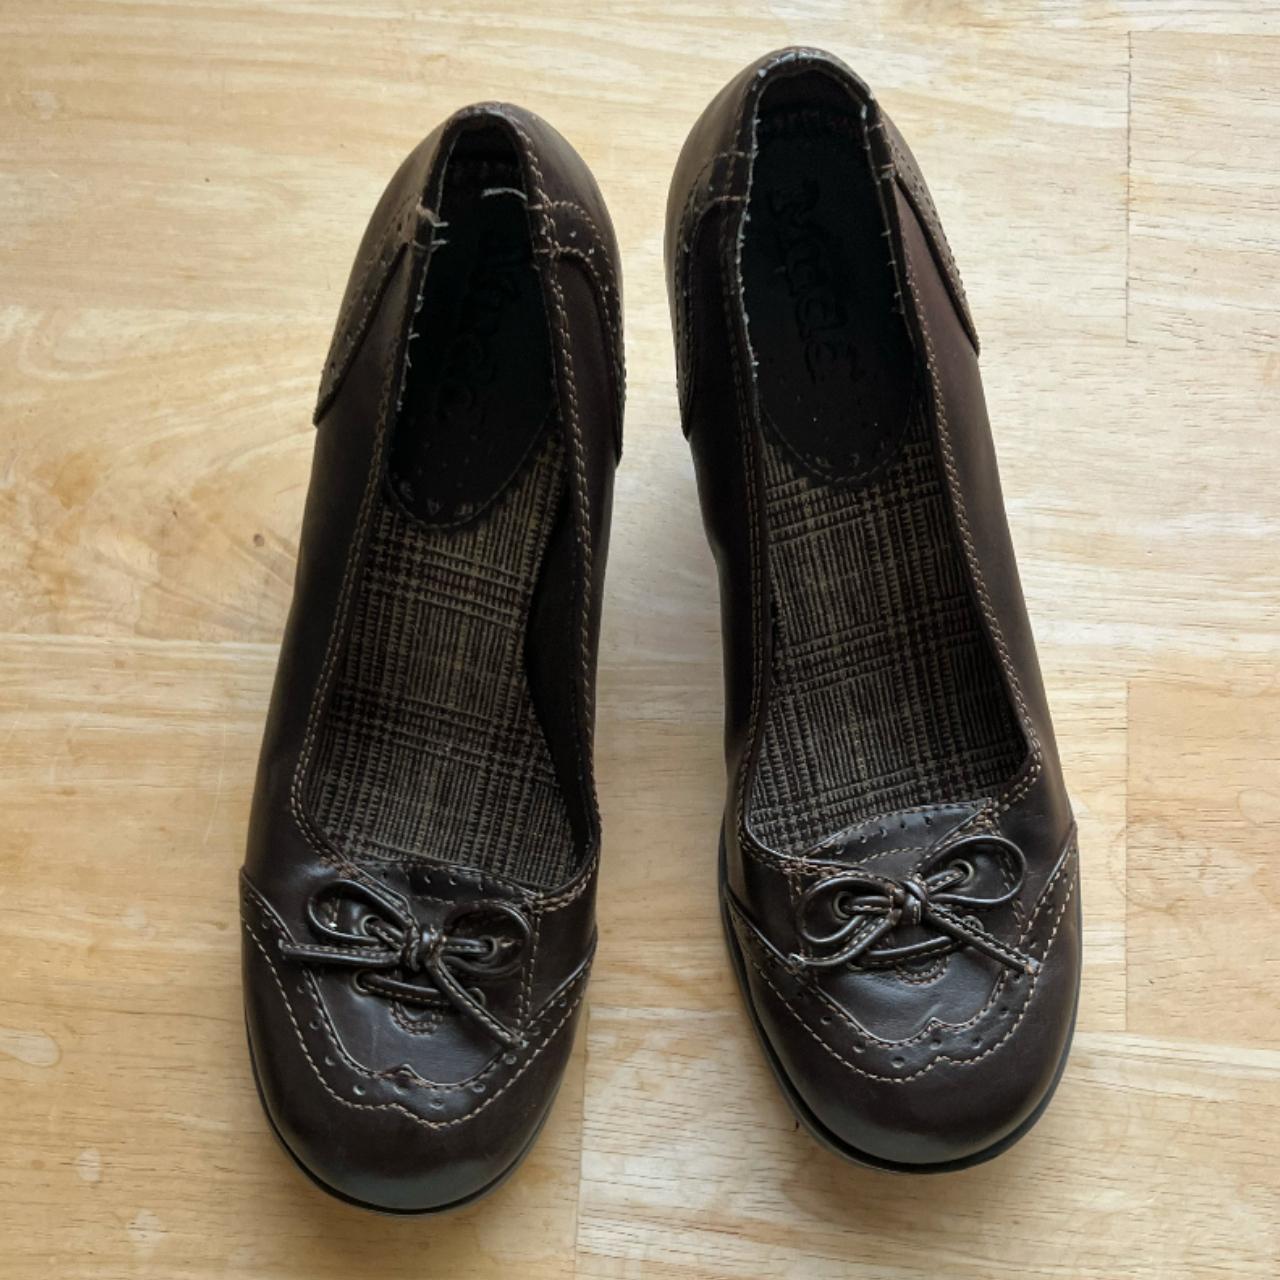 mudd ballet flat shoes size: 6.5-7 brand: mudd - Depop